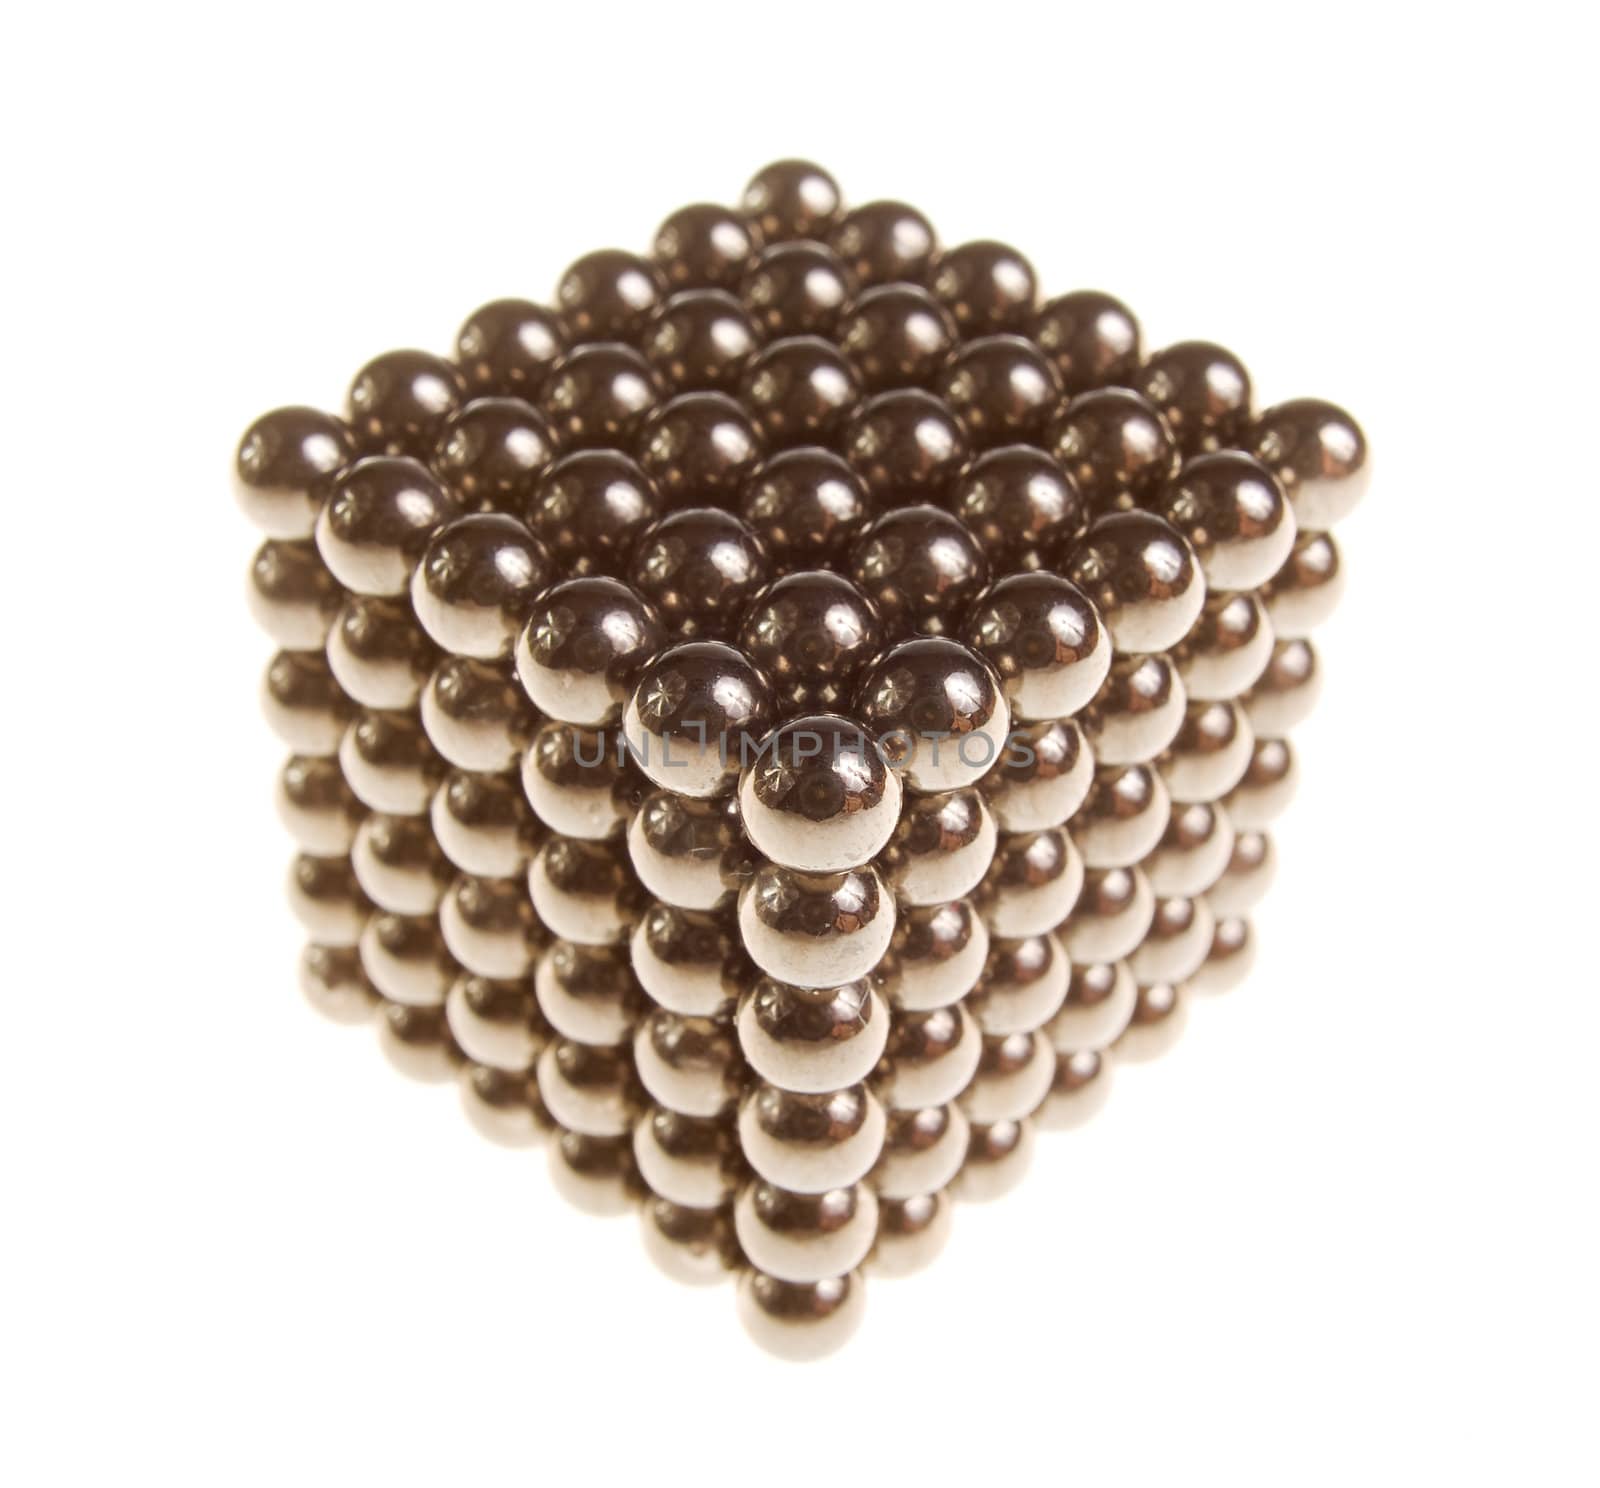 Cube of shiny metallic balls